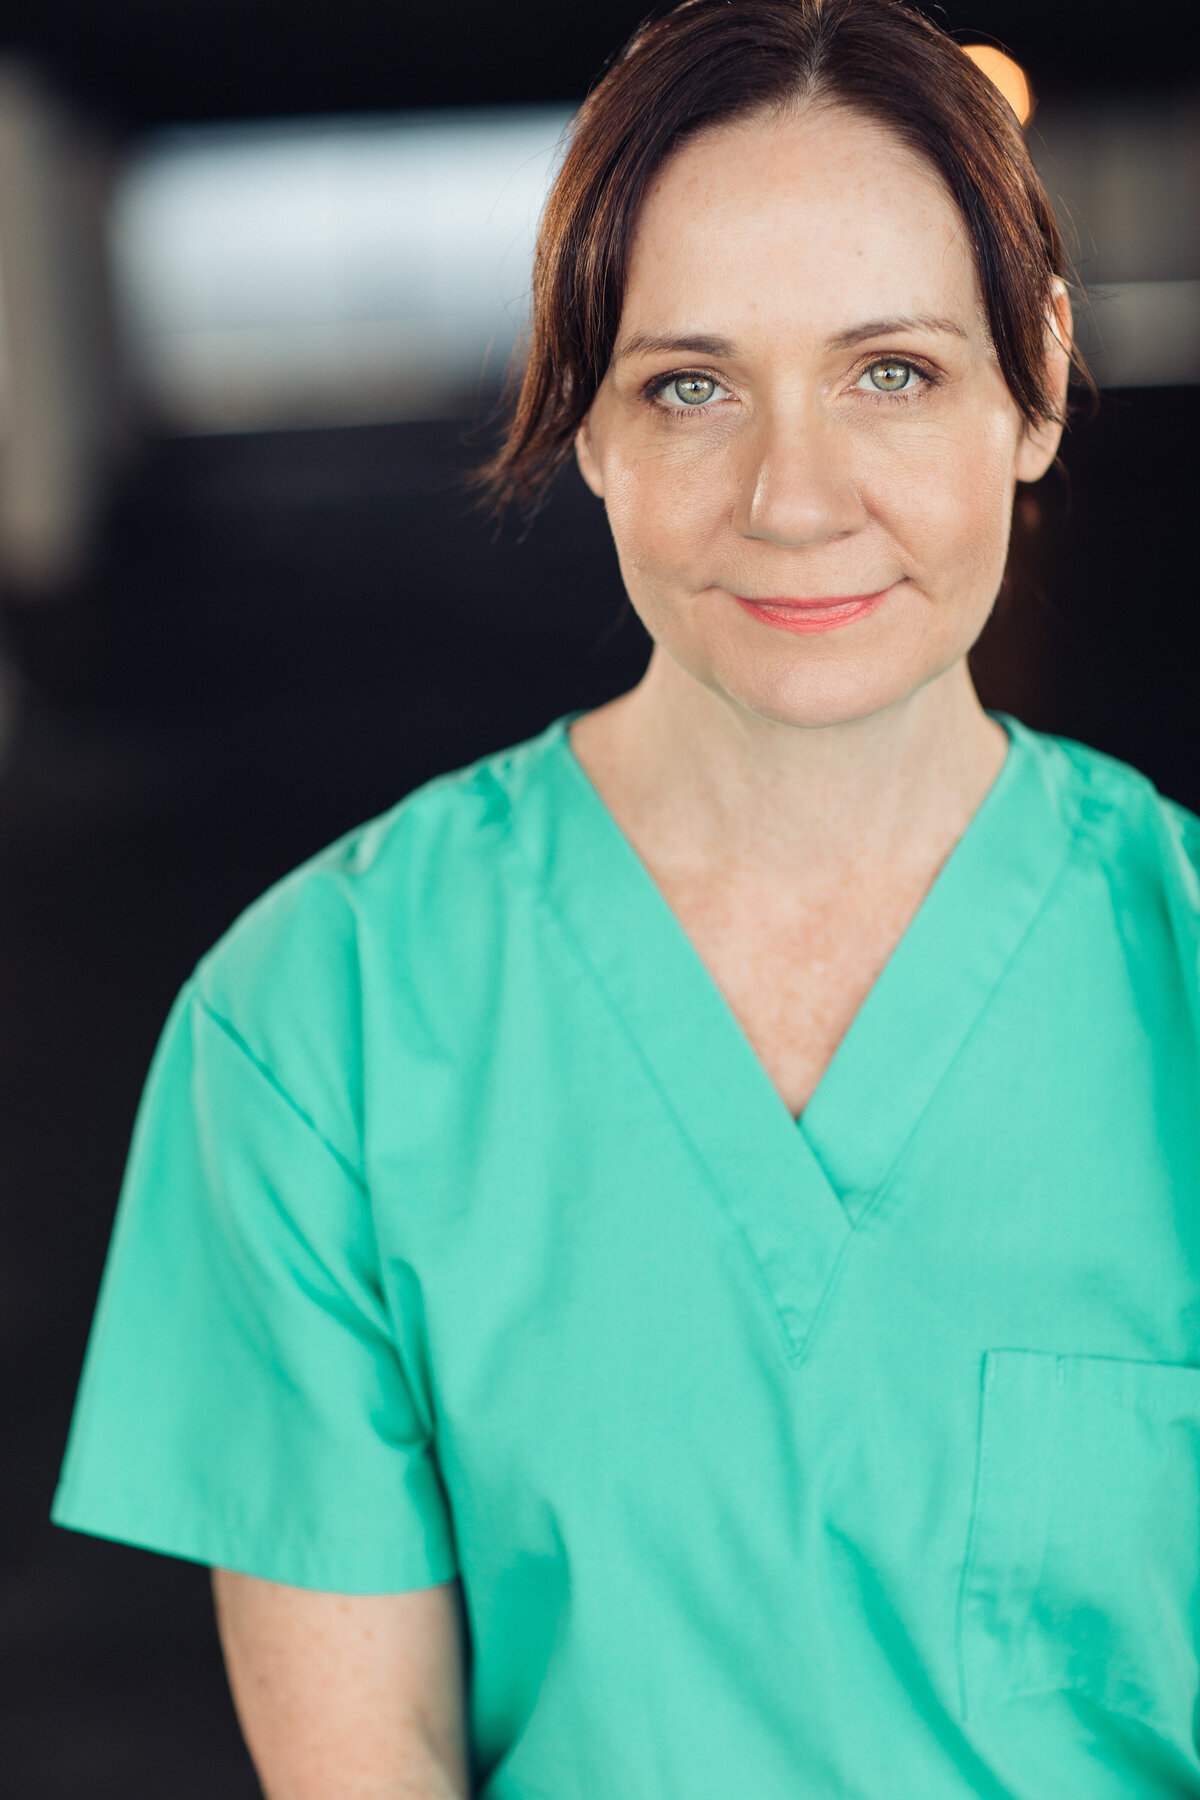 Headshot Photograph Of Woman In Mint Green Hospital Uniform Los Angeles